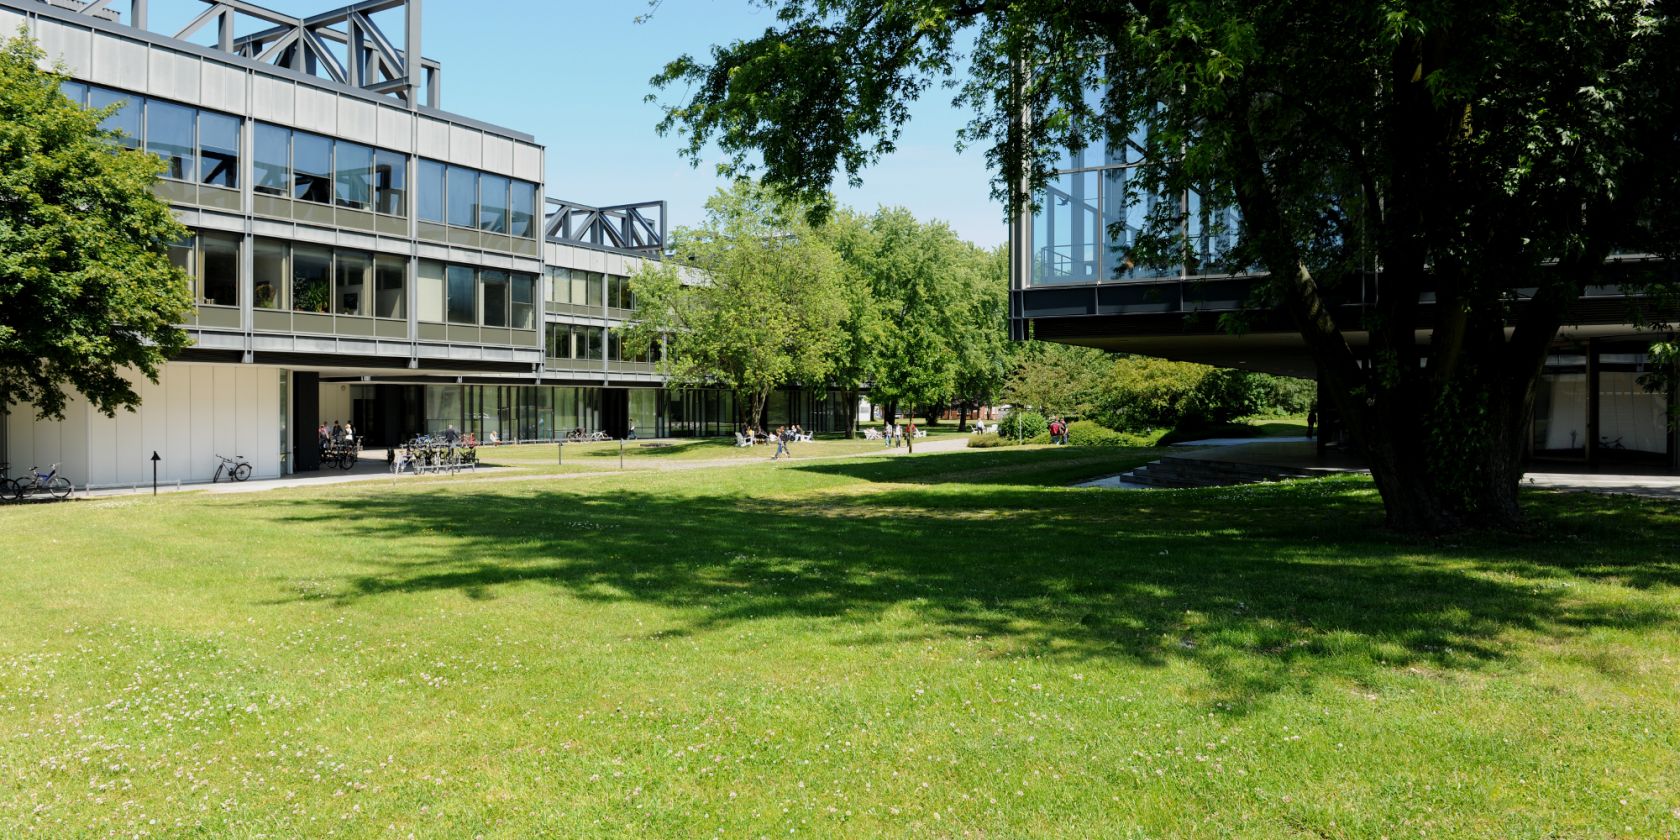 BibliothekHelmutSchmidtUniversitaet2, © Helmut-Schmidt-Universität